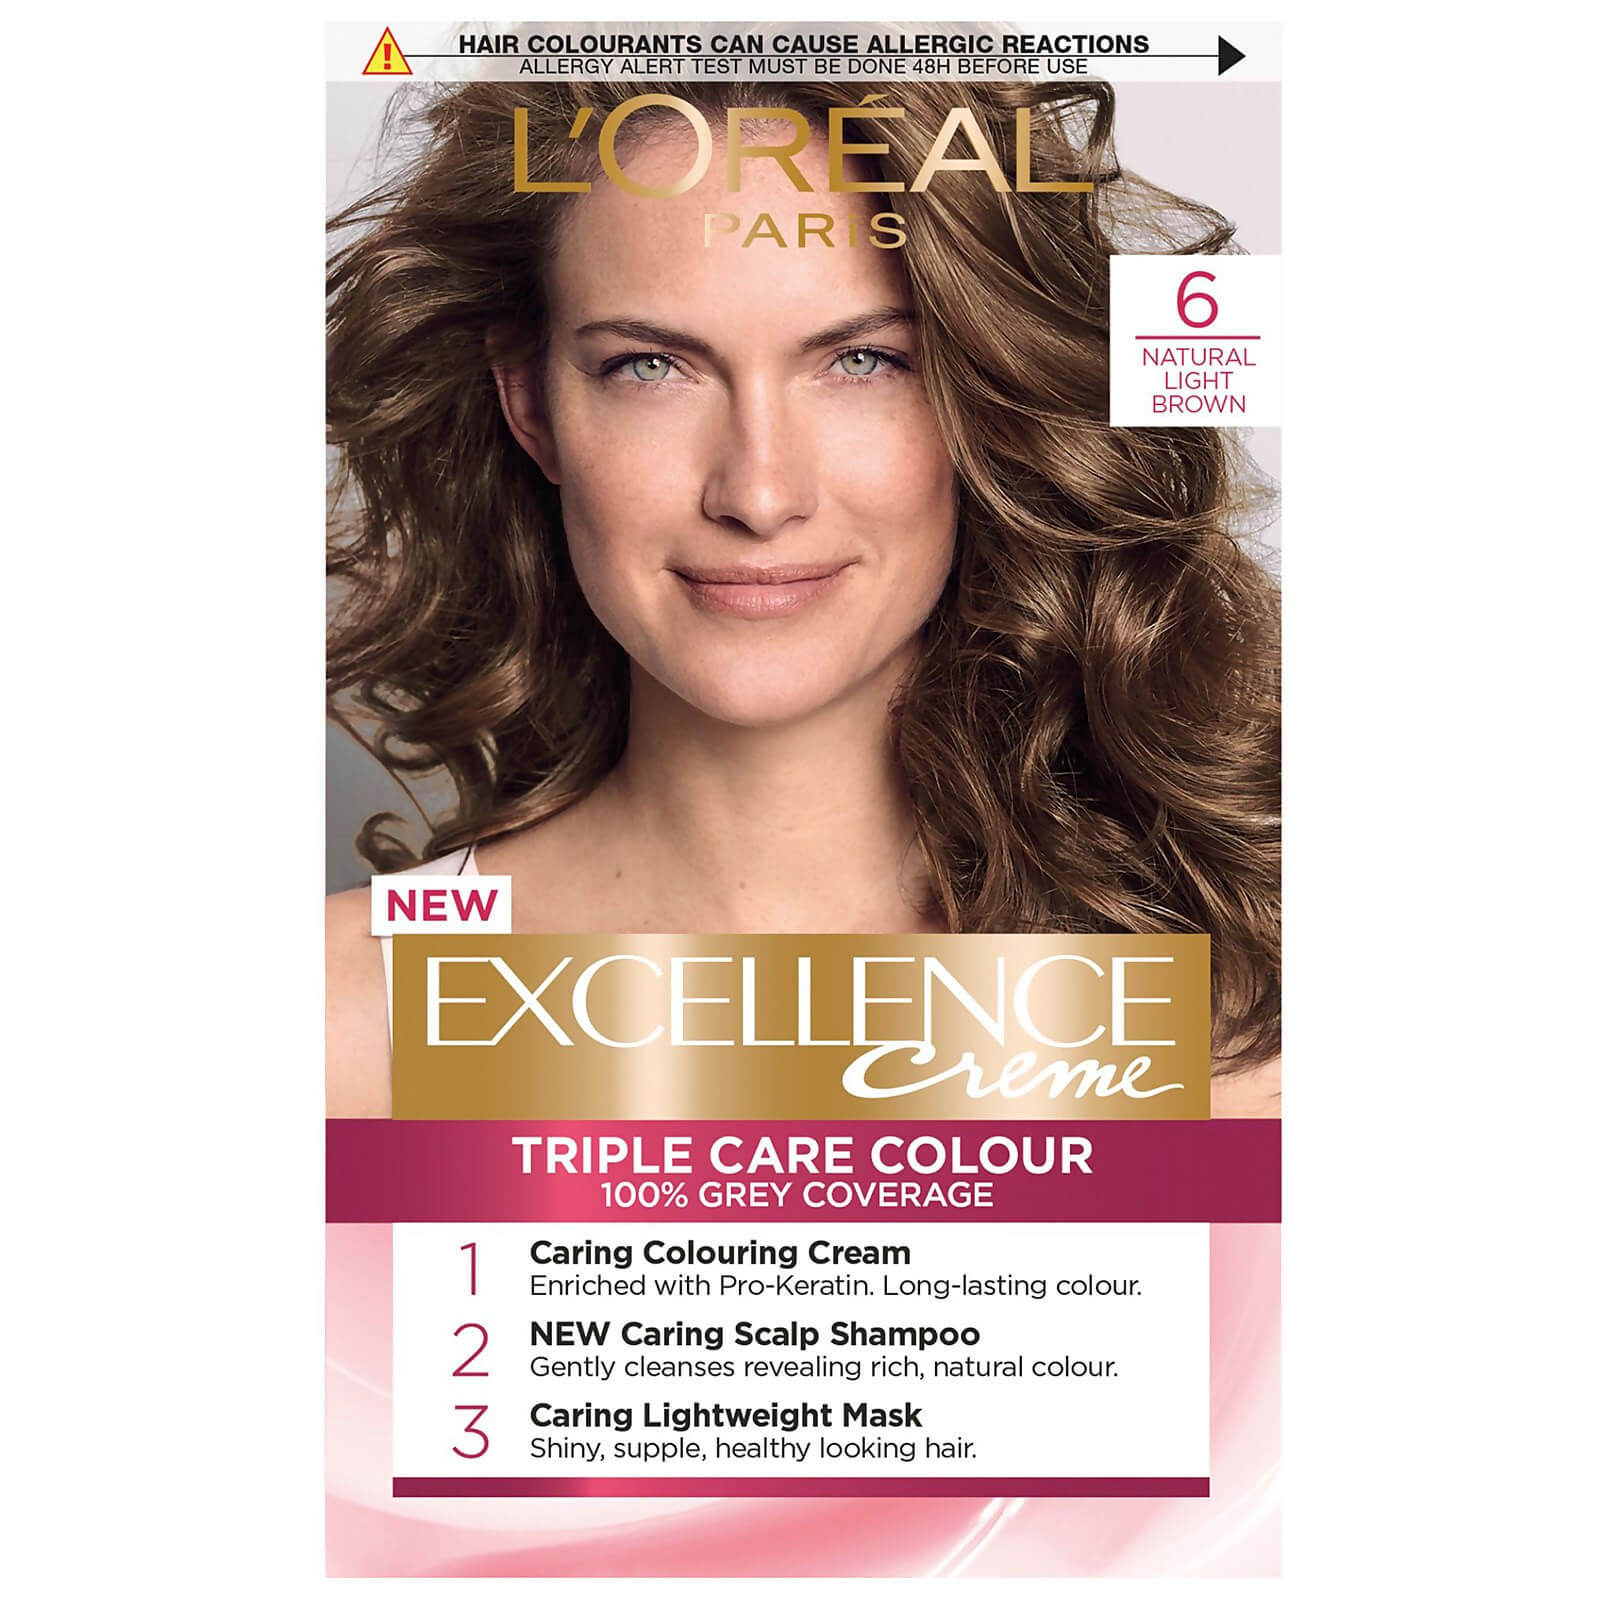 L'Oreal Paris Excellence Creme Permanent Hair Dye (Various Shades) - 6 Natural Light Brown